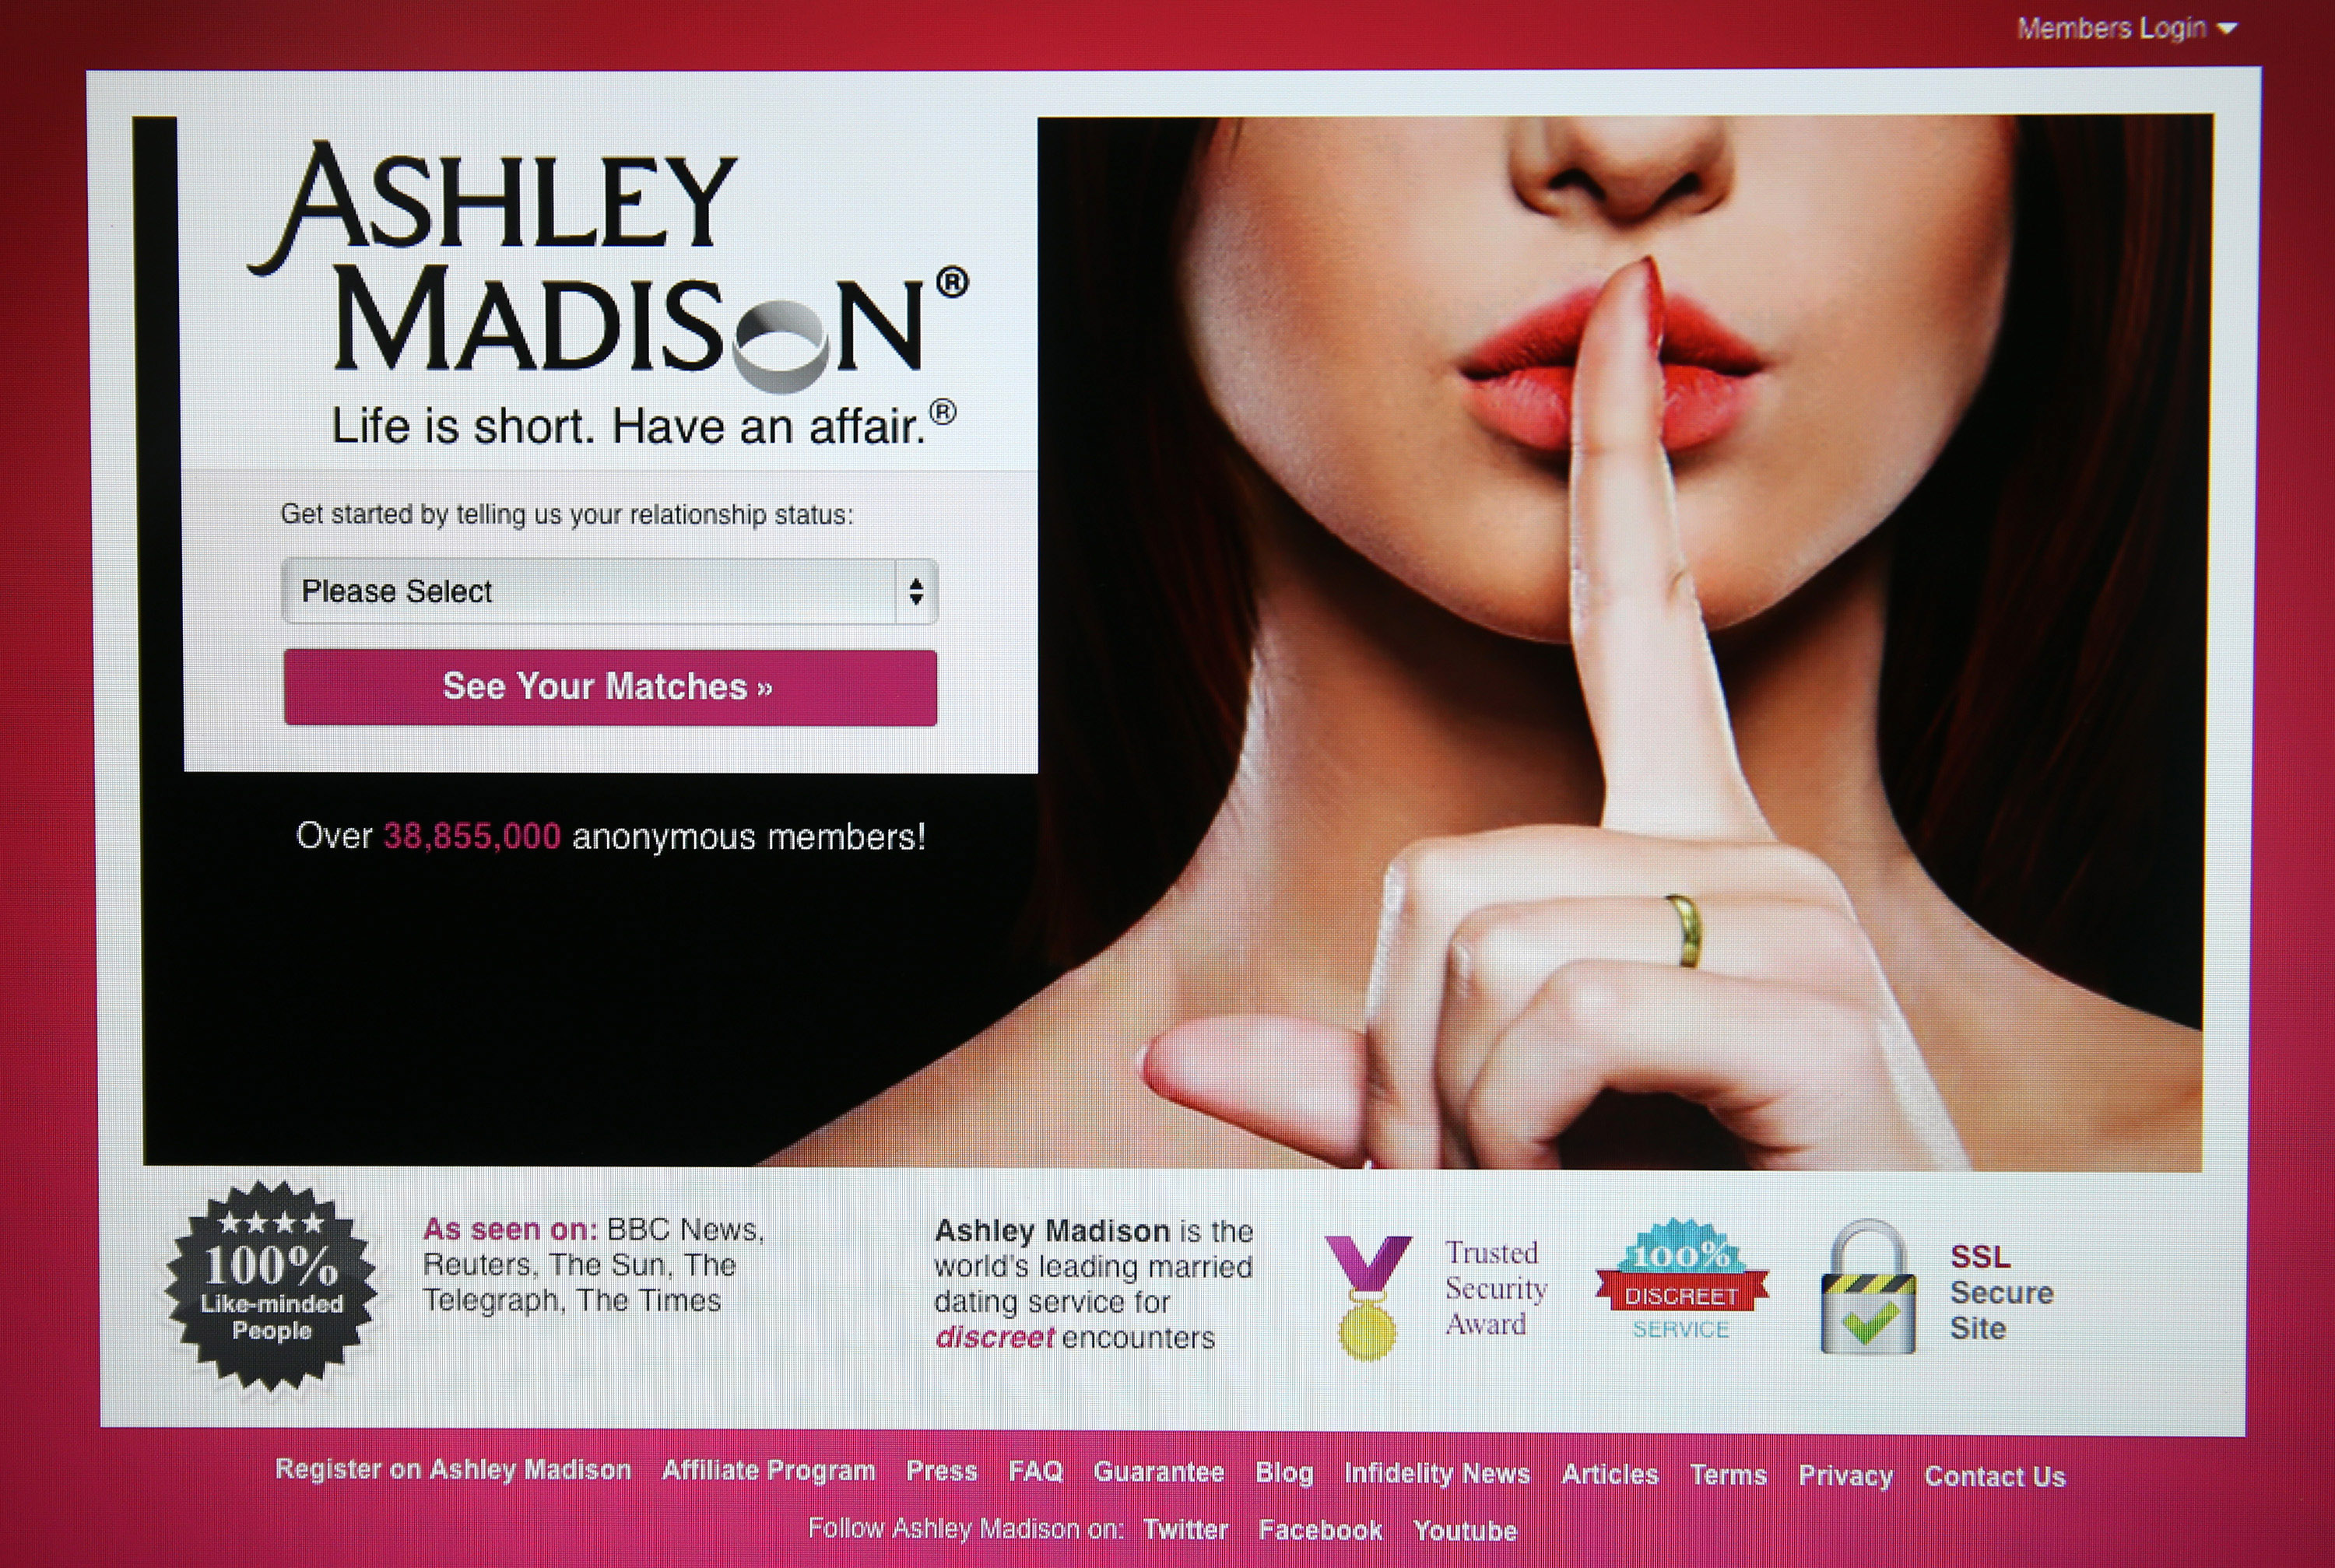 Ashley Madison Email Data Dump Shows .Gov, .Mil Addresses